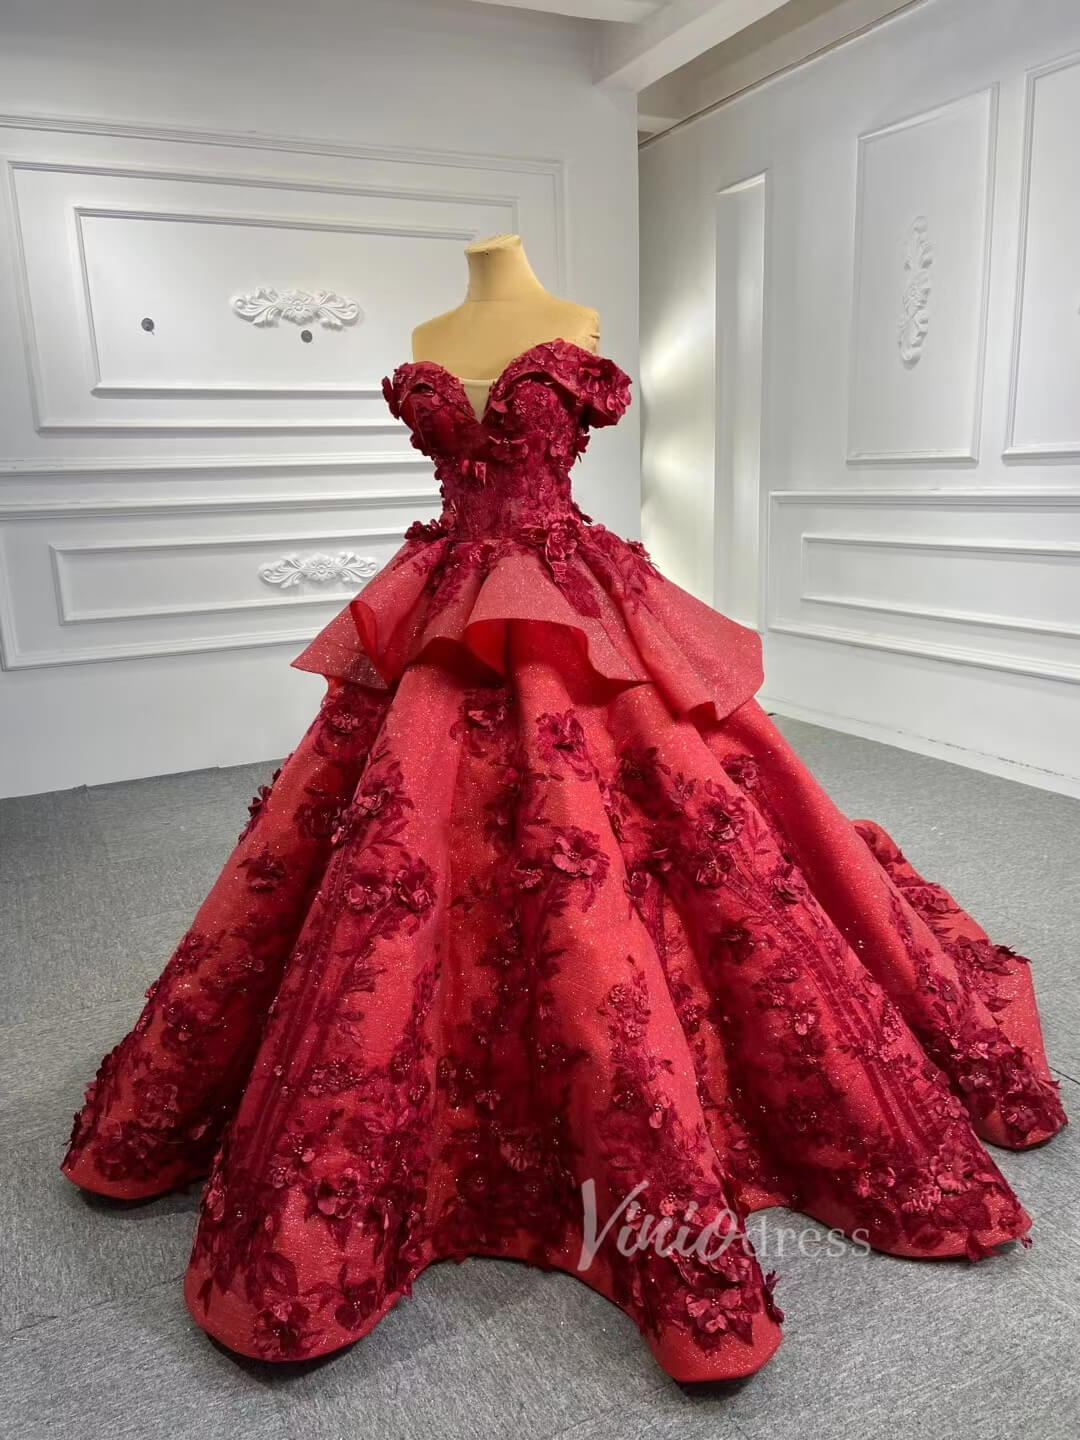 Red Floral Princess Dress Wedding Ball Gown 66878 Long Sleeve-prom dresses-Viniodress-Viniodress